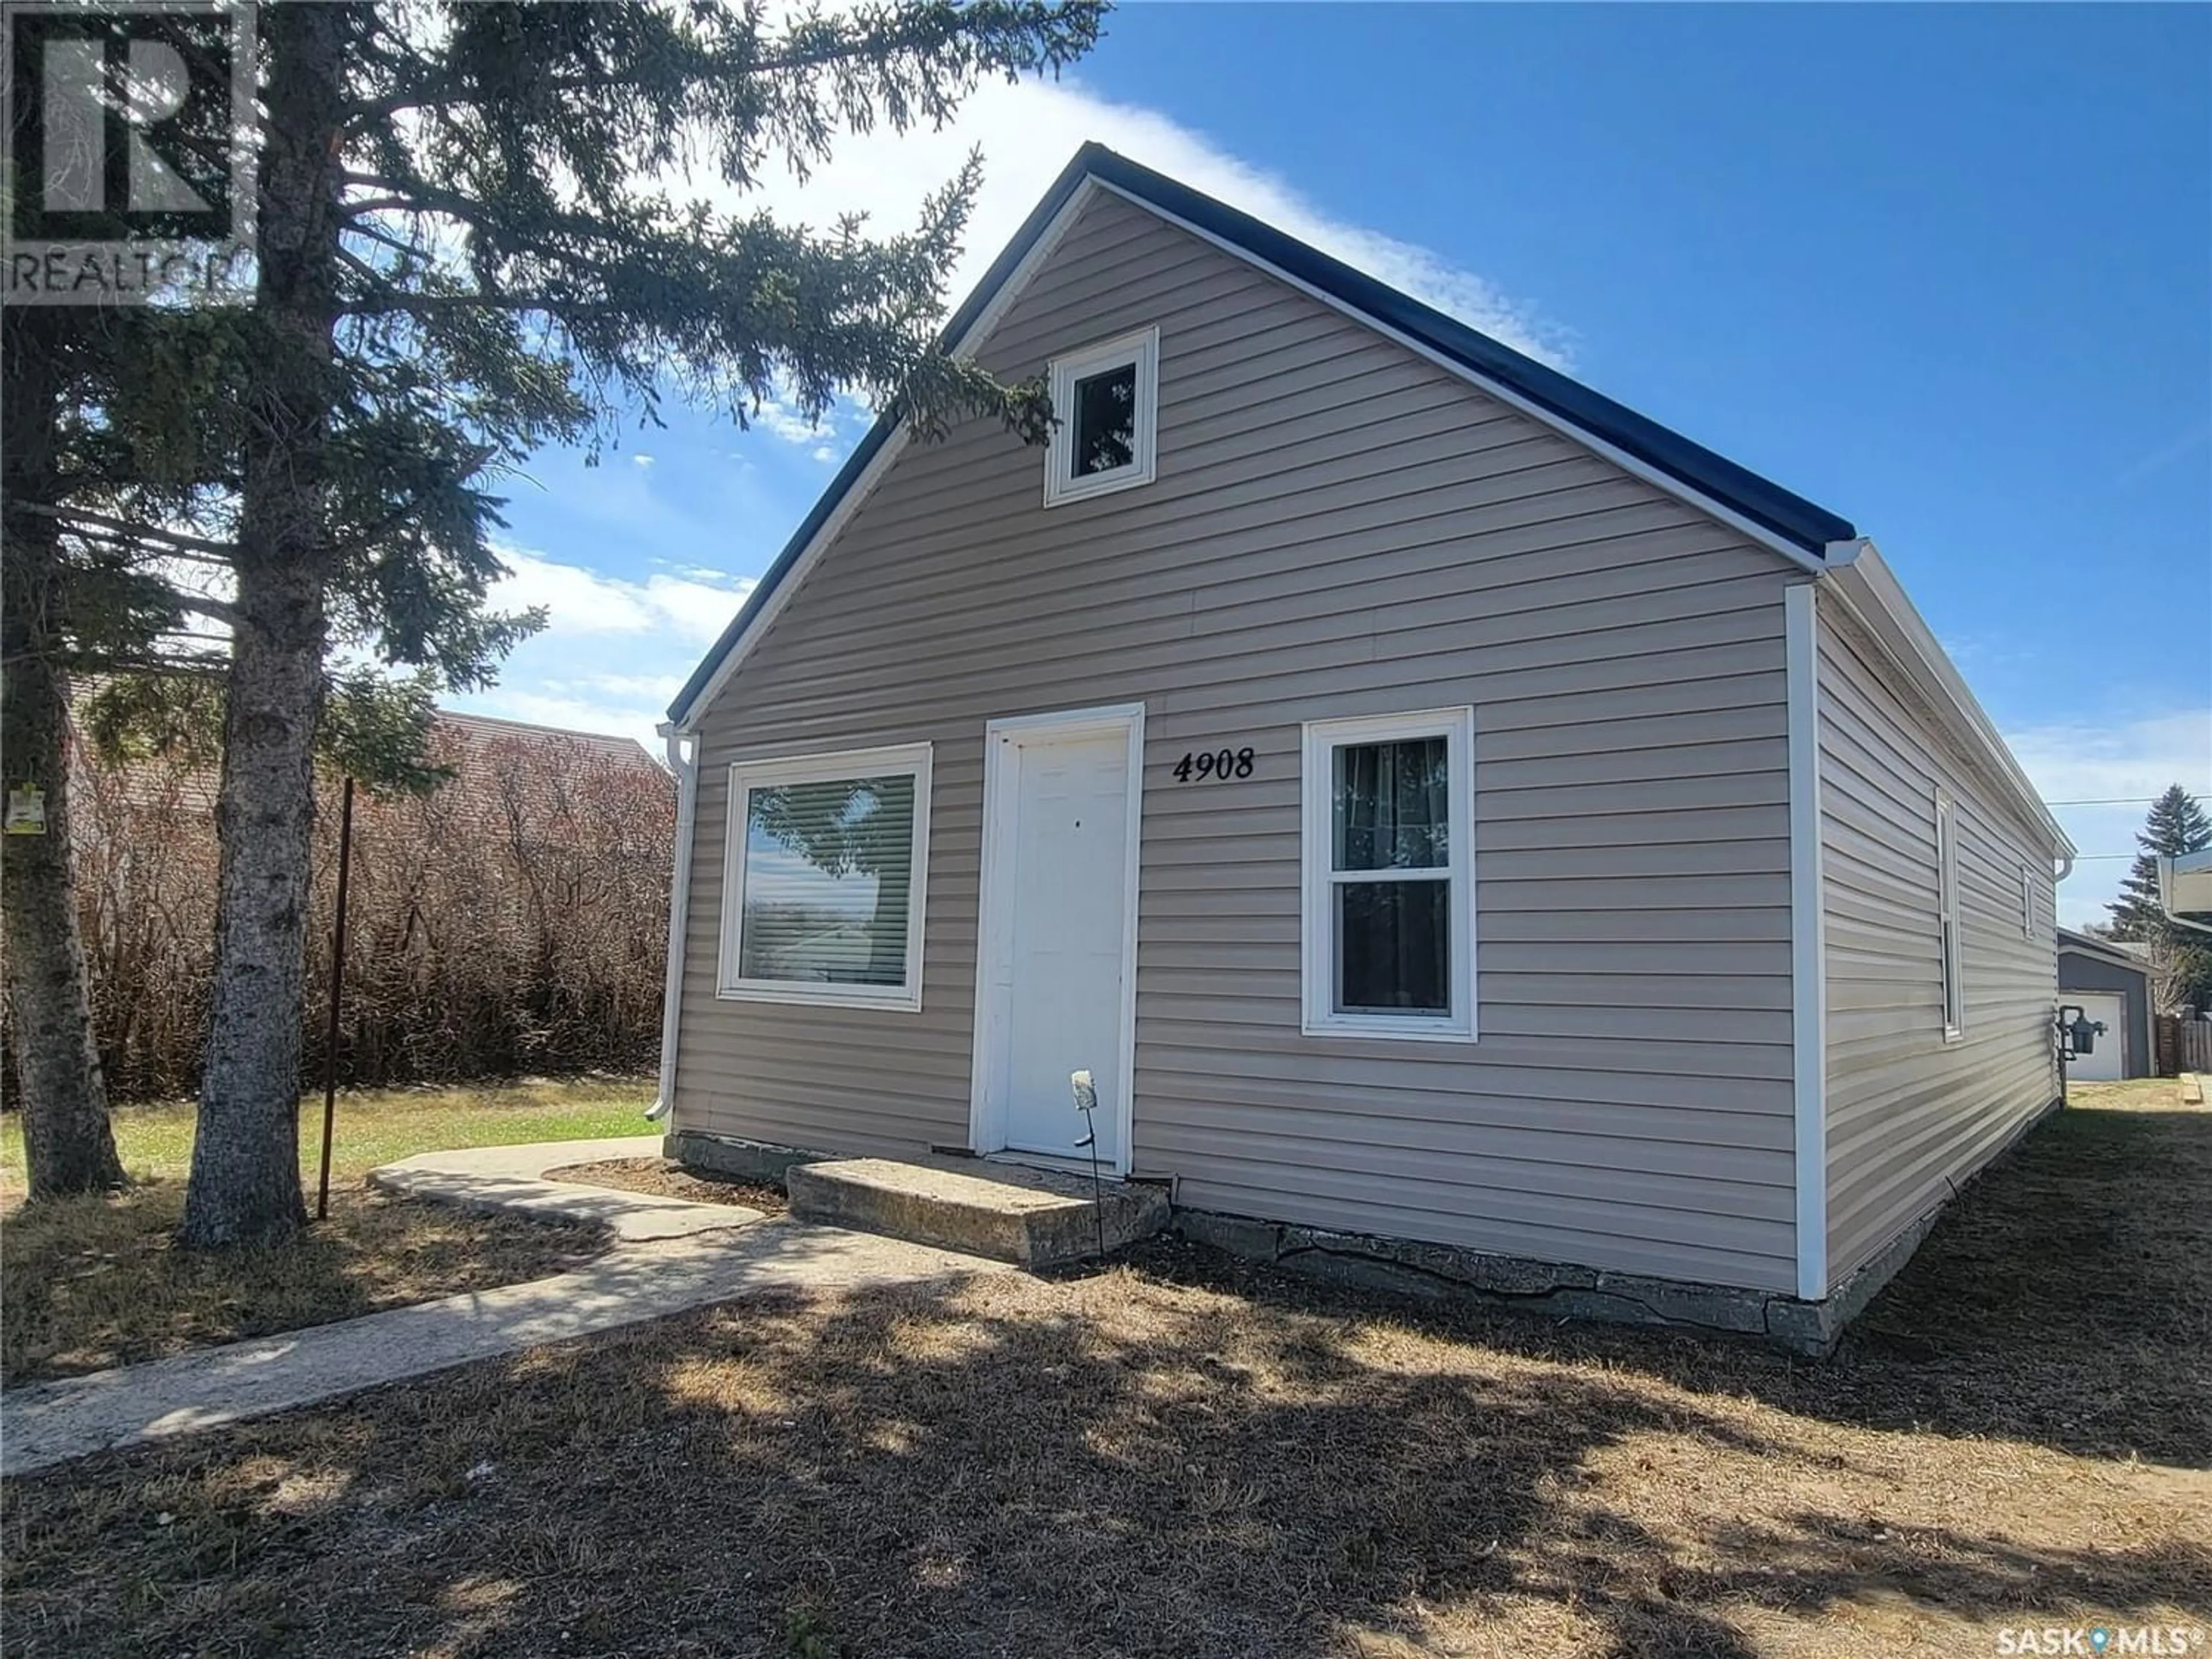 Home with vinyl exterior material for 4908 Leader STREET, Macklin Saskatchewan S0L2C0